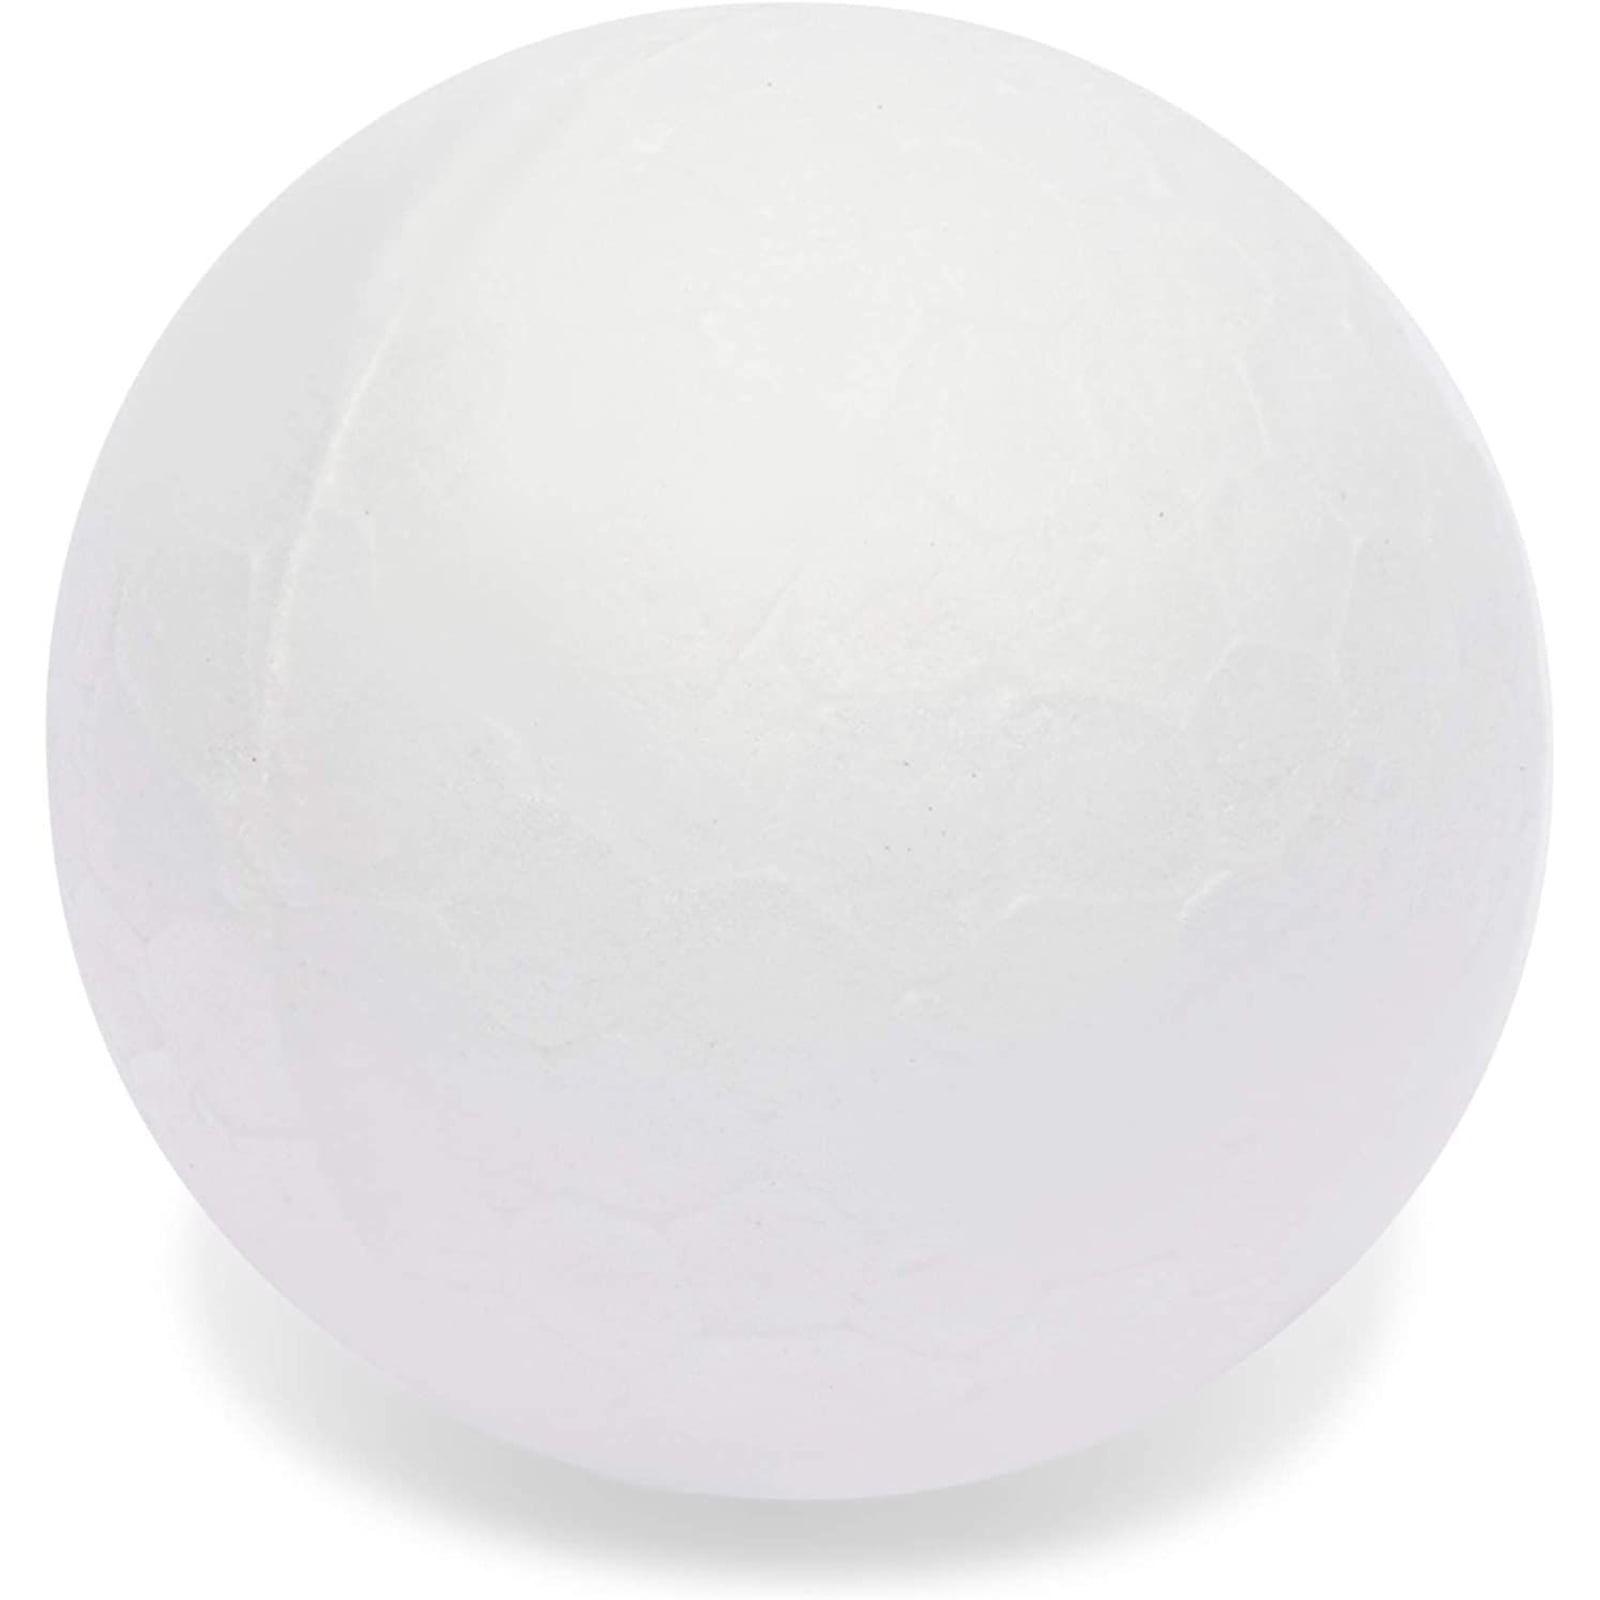 LOMIMOS 300pcs 1 inch White Foam Balls Mini White Styrofoam Balls for Arts & Crafts DIY School Projects Making Supplies